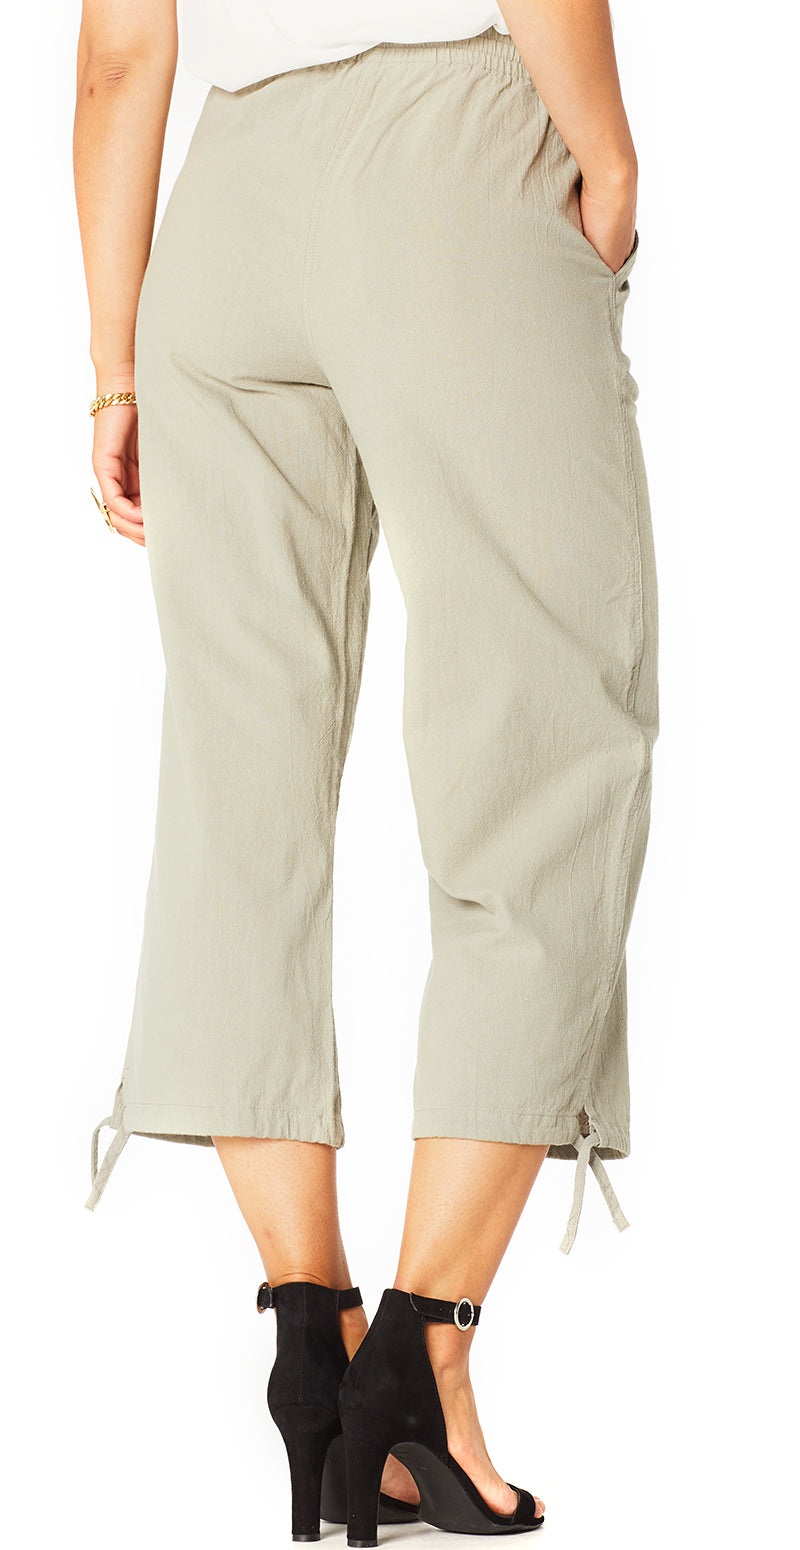 Khaki capri bukser med bindebånd